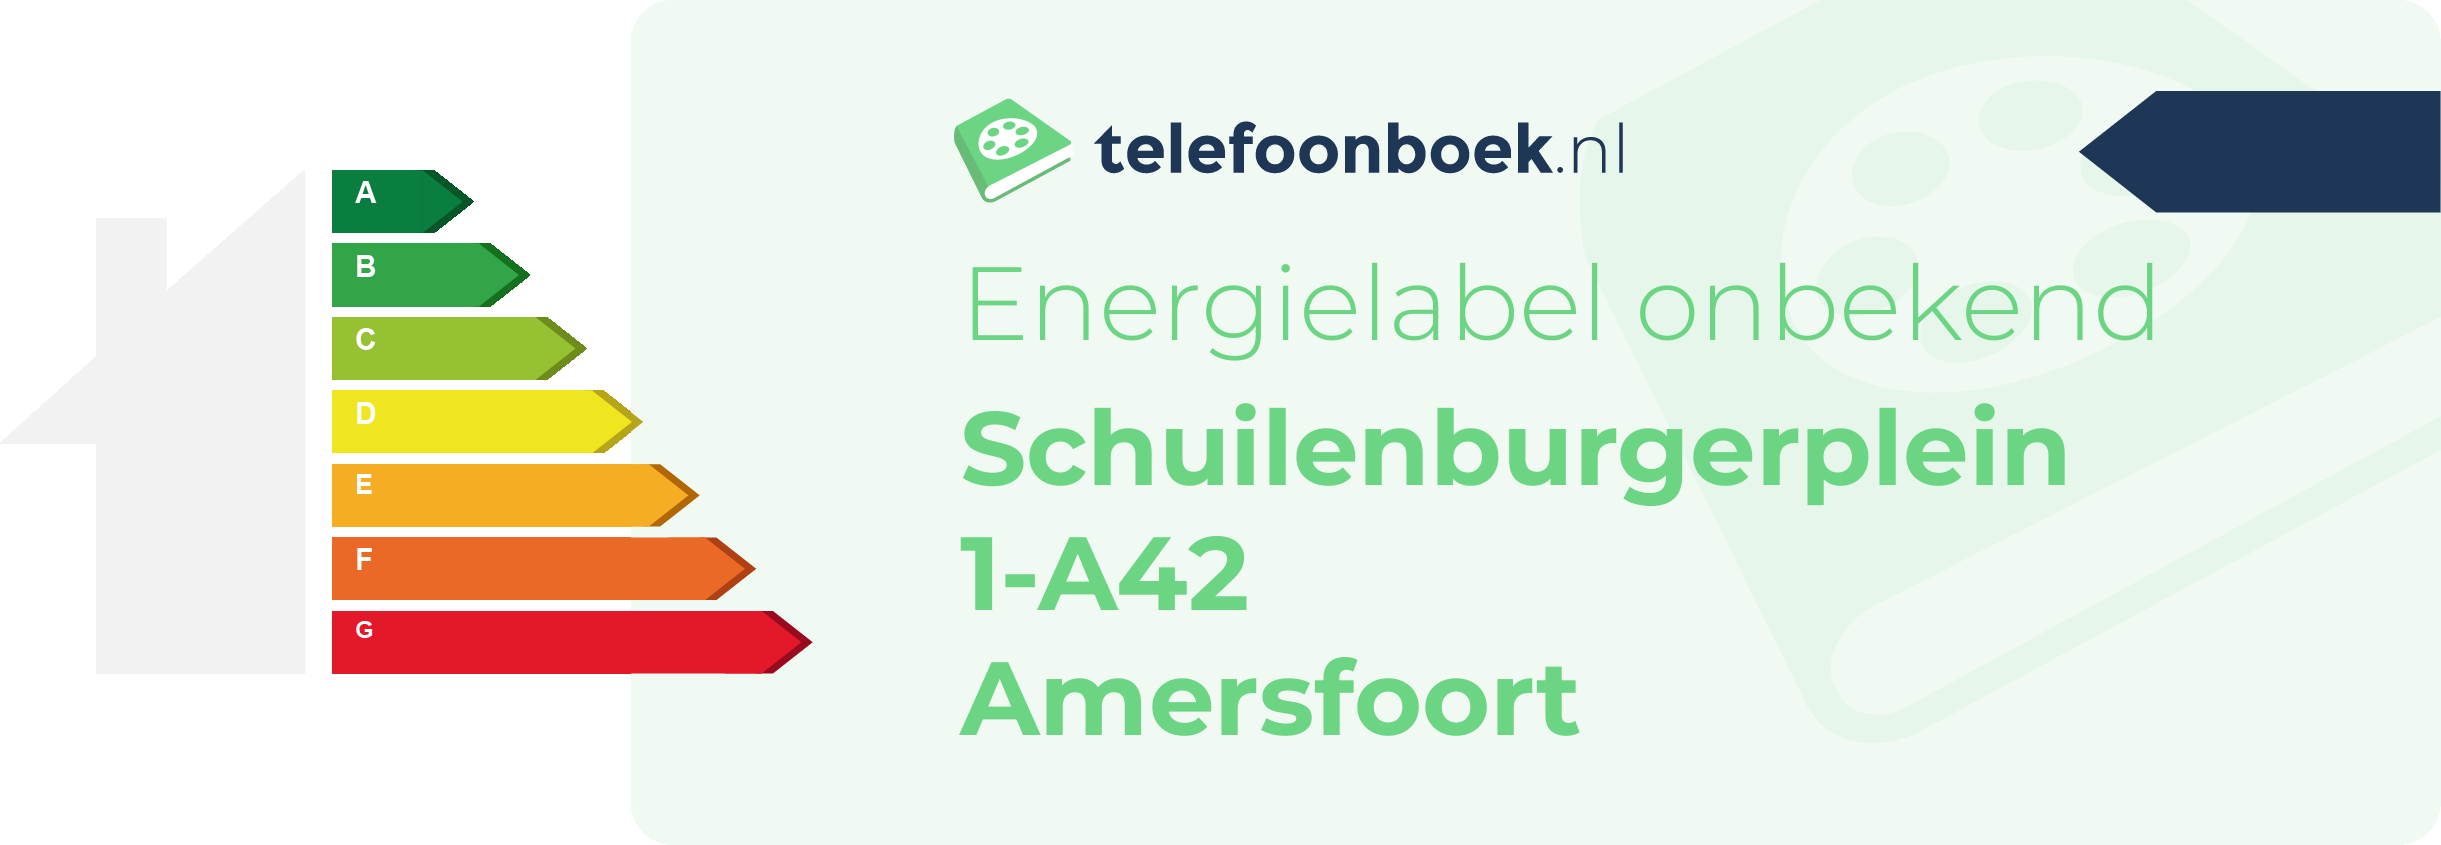 Energielabel Schuilenburgerplein 1-A42 Amersfoort